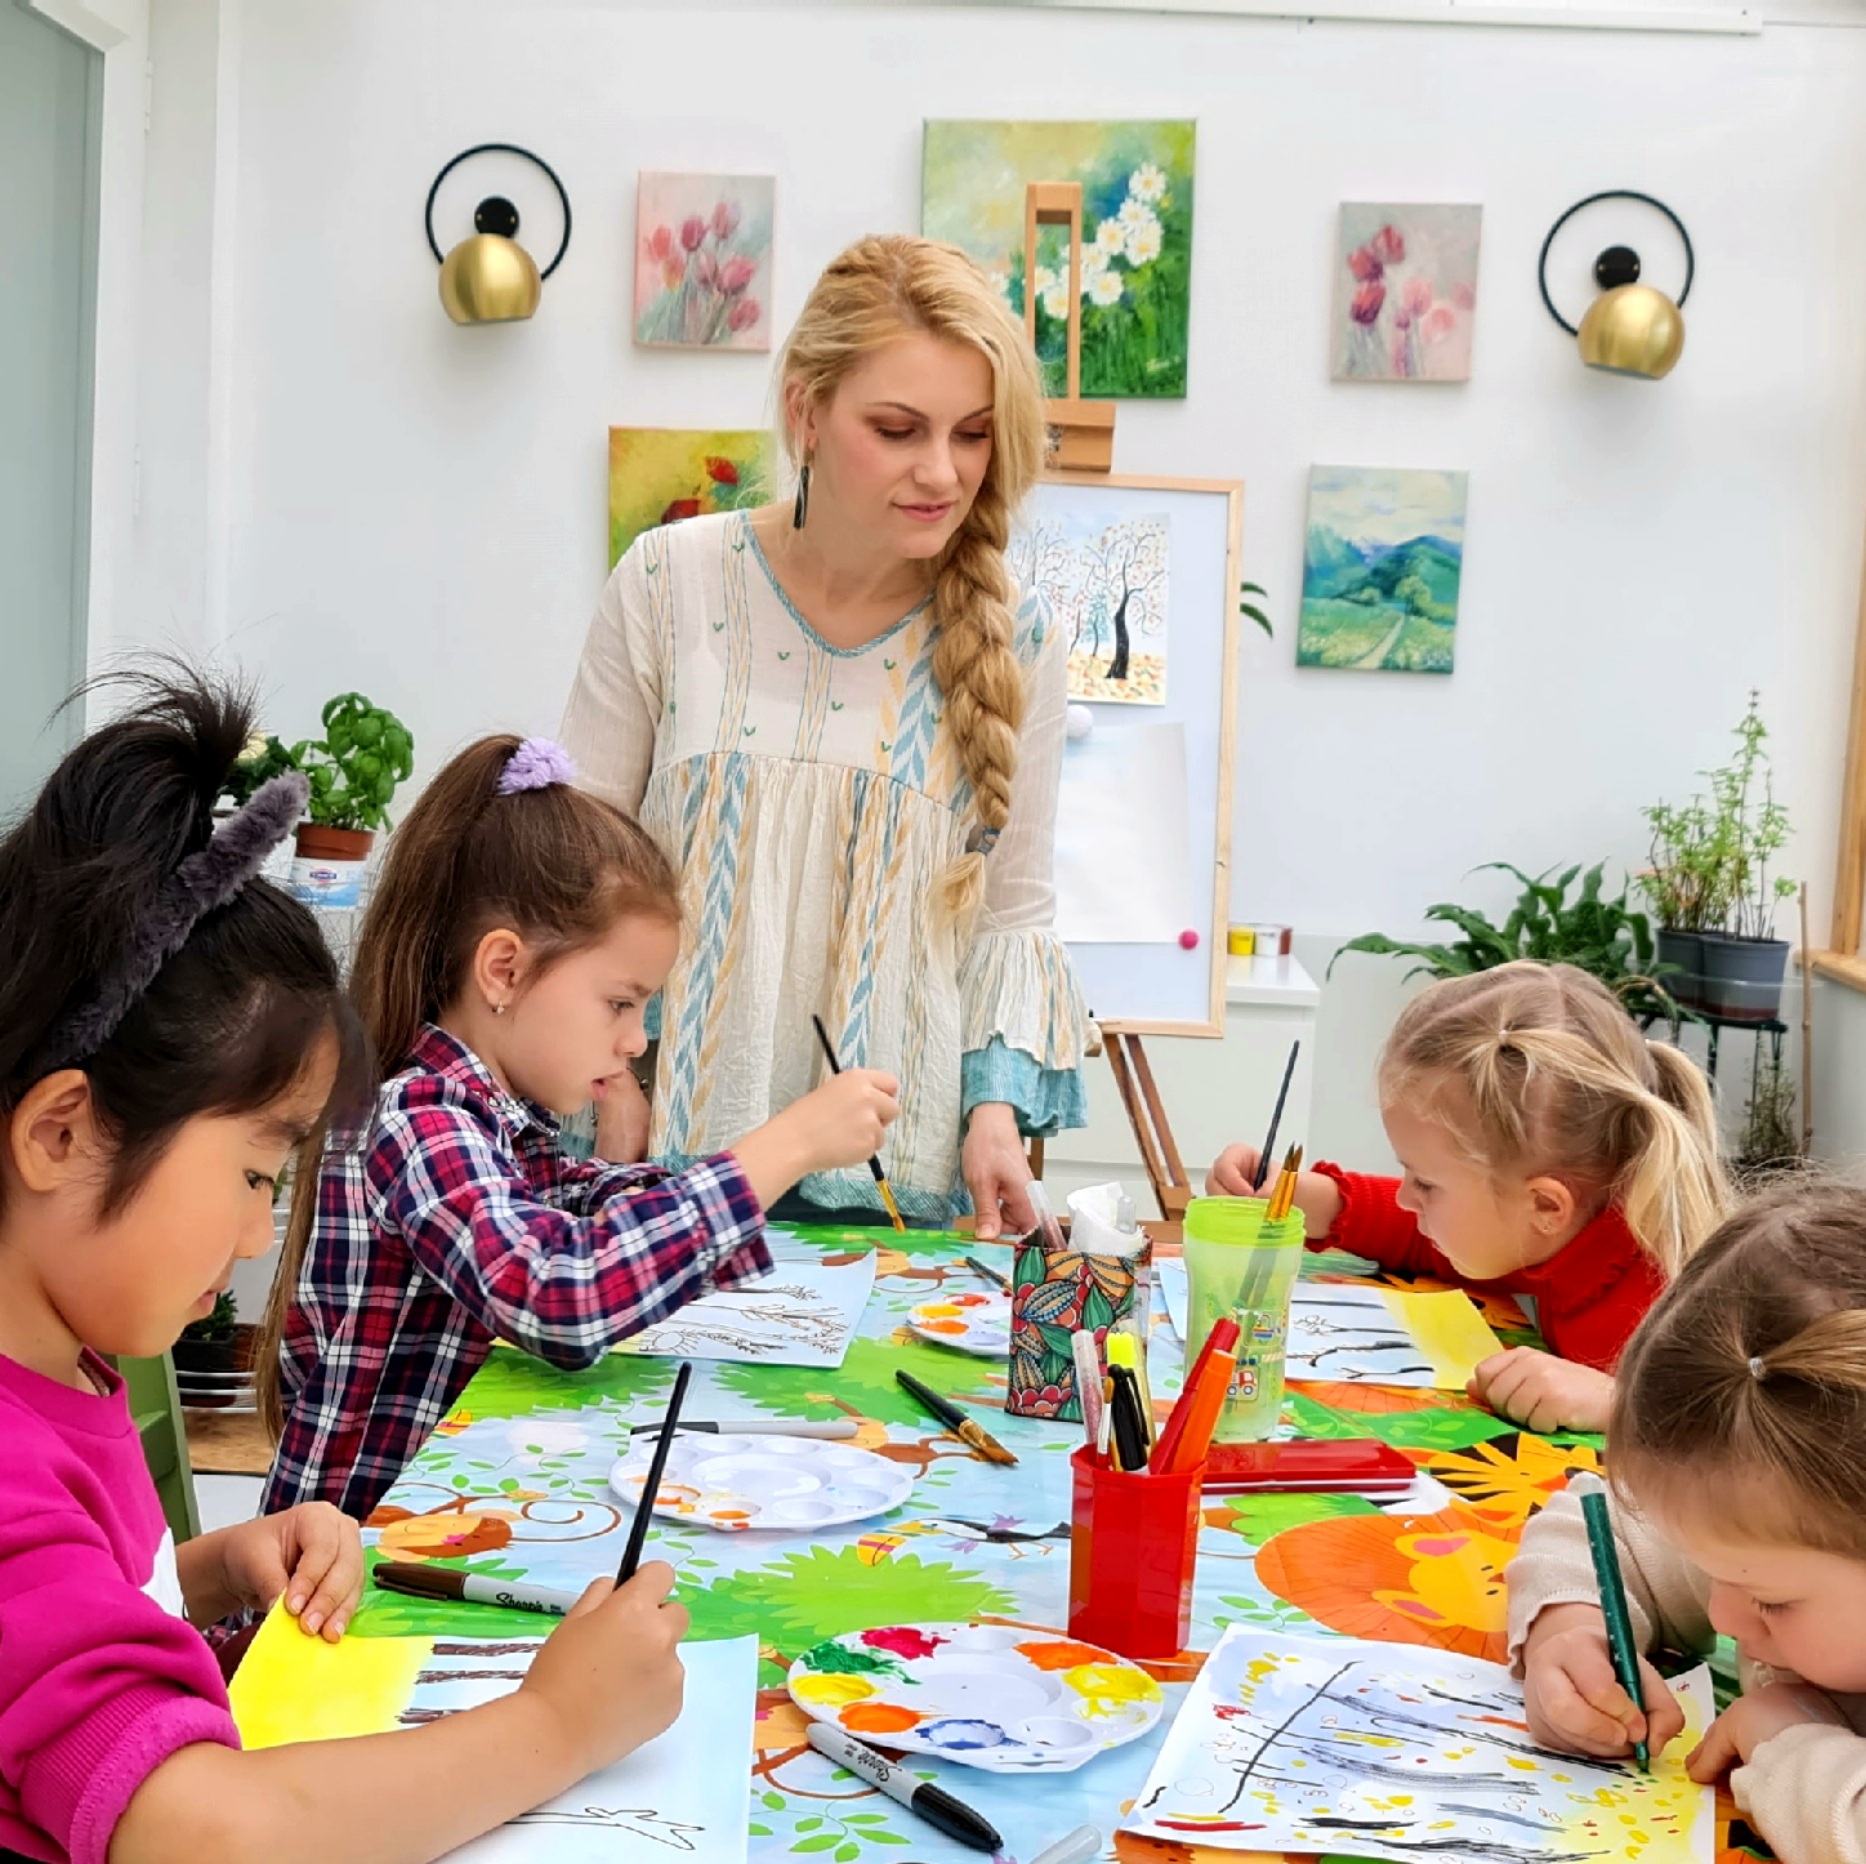 art classes age 5 to 8 group Chessington Surrey lessons children professional artist art teacher Irina Taneva